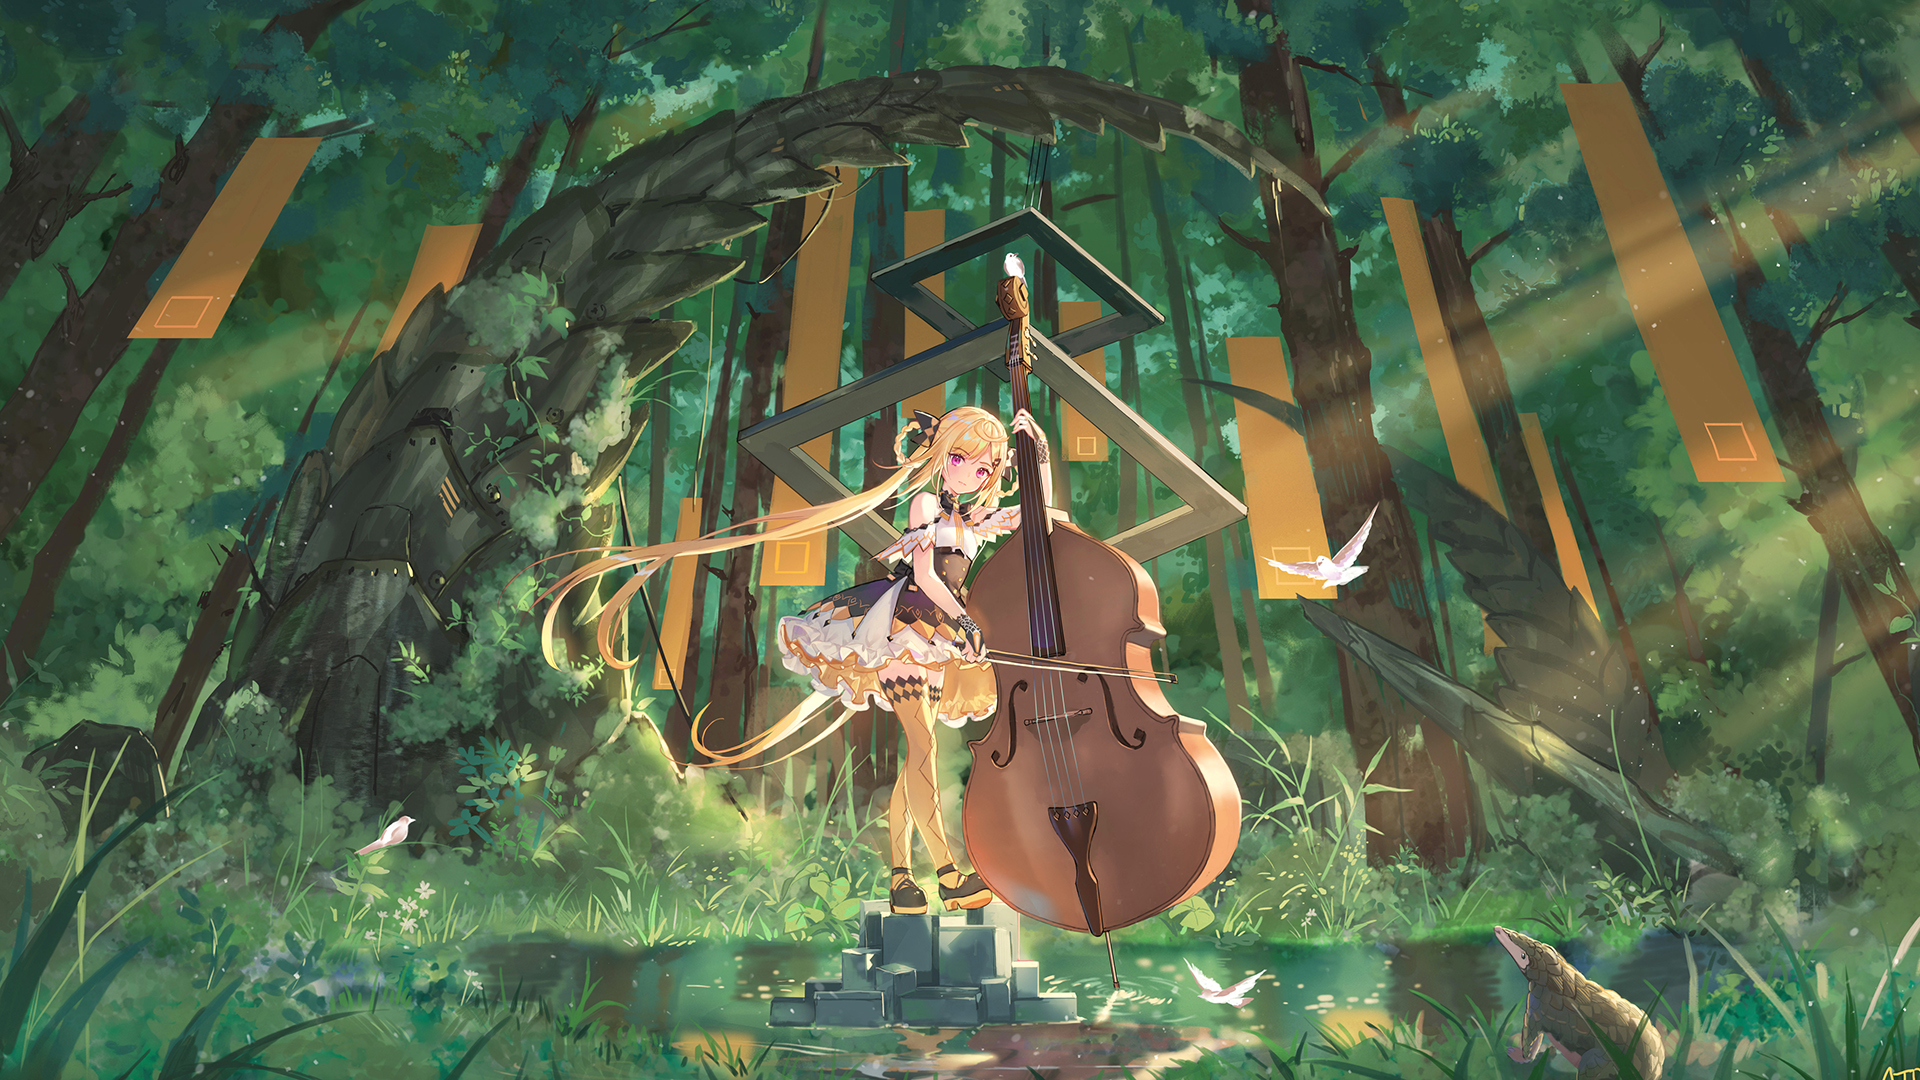 Cello - Anime Manga World Wallpapers and Images - Desktop Nexus Groups